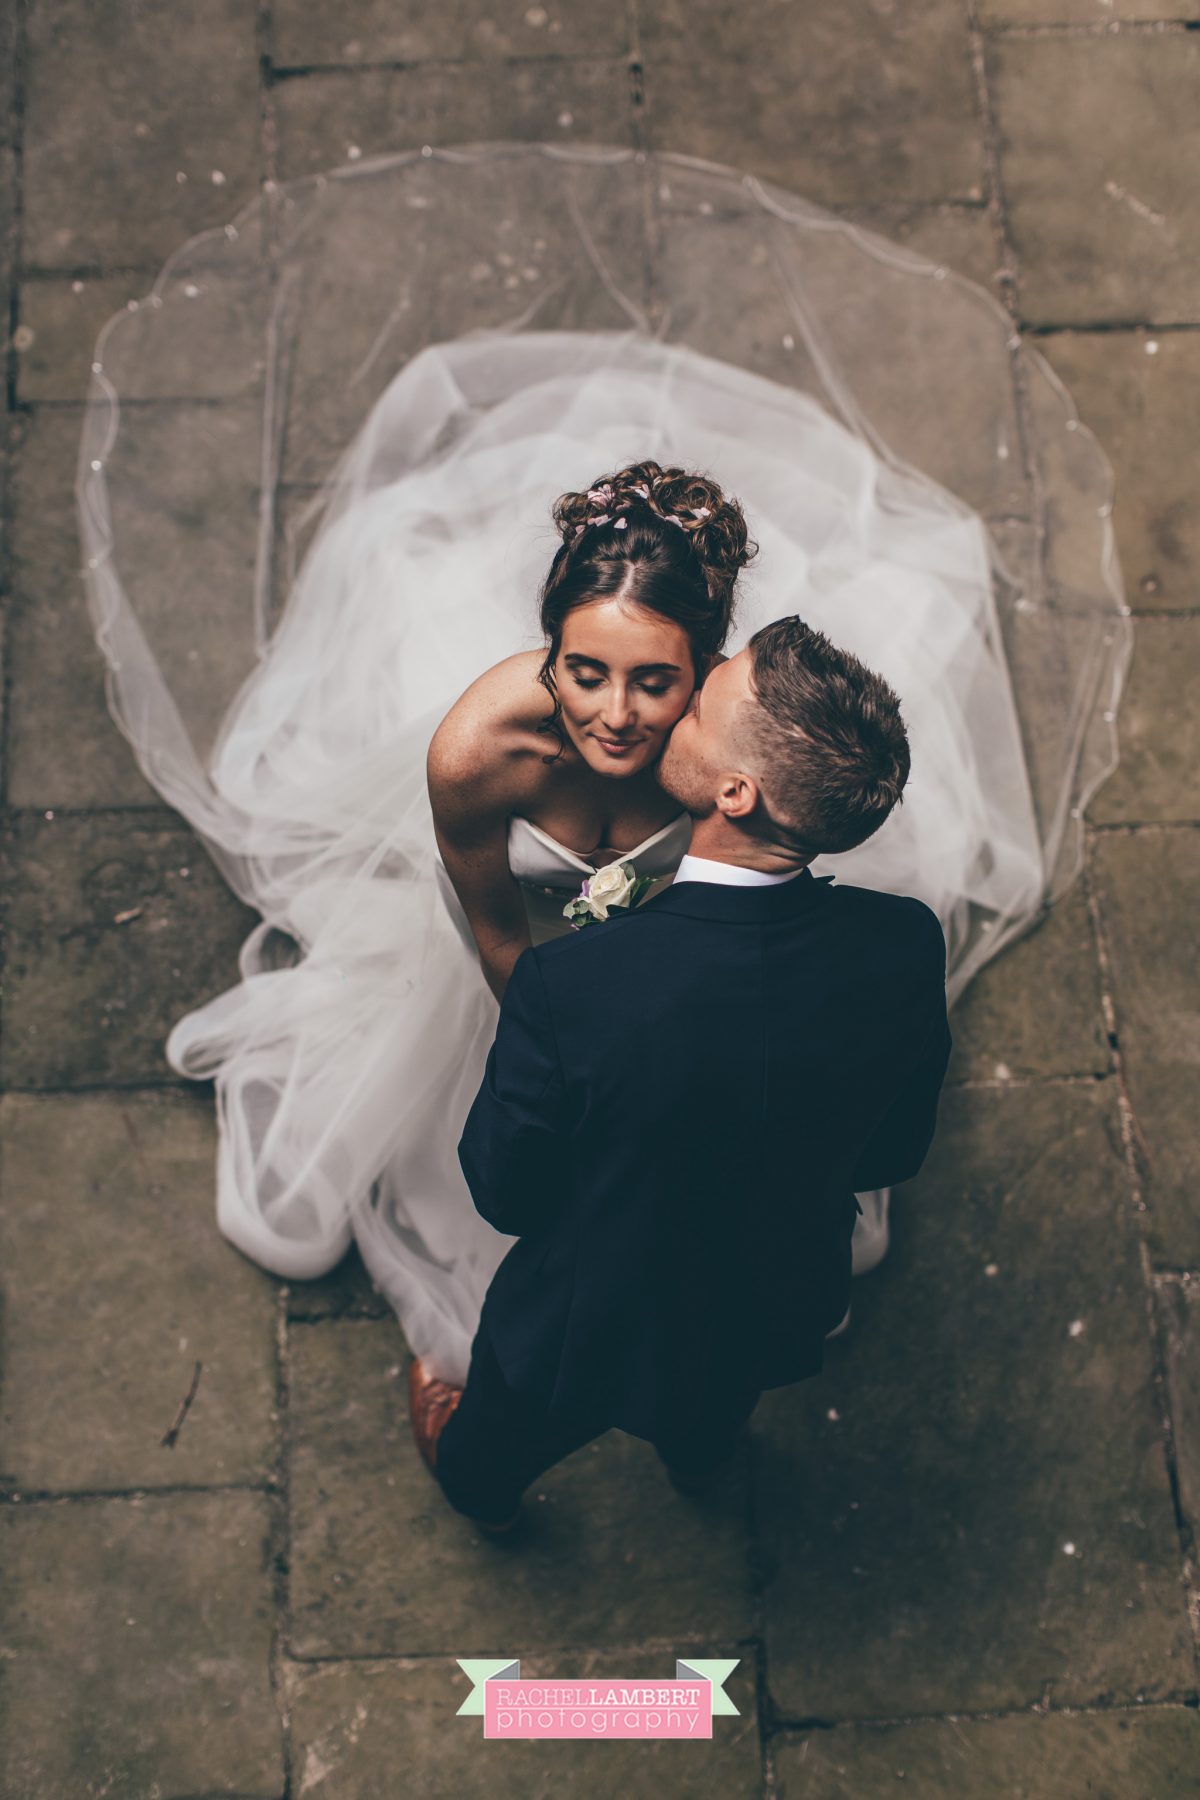 olwalls wedding photographer rachel lambert photography bride and groom weobley castle